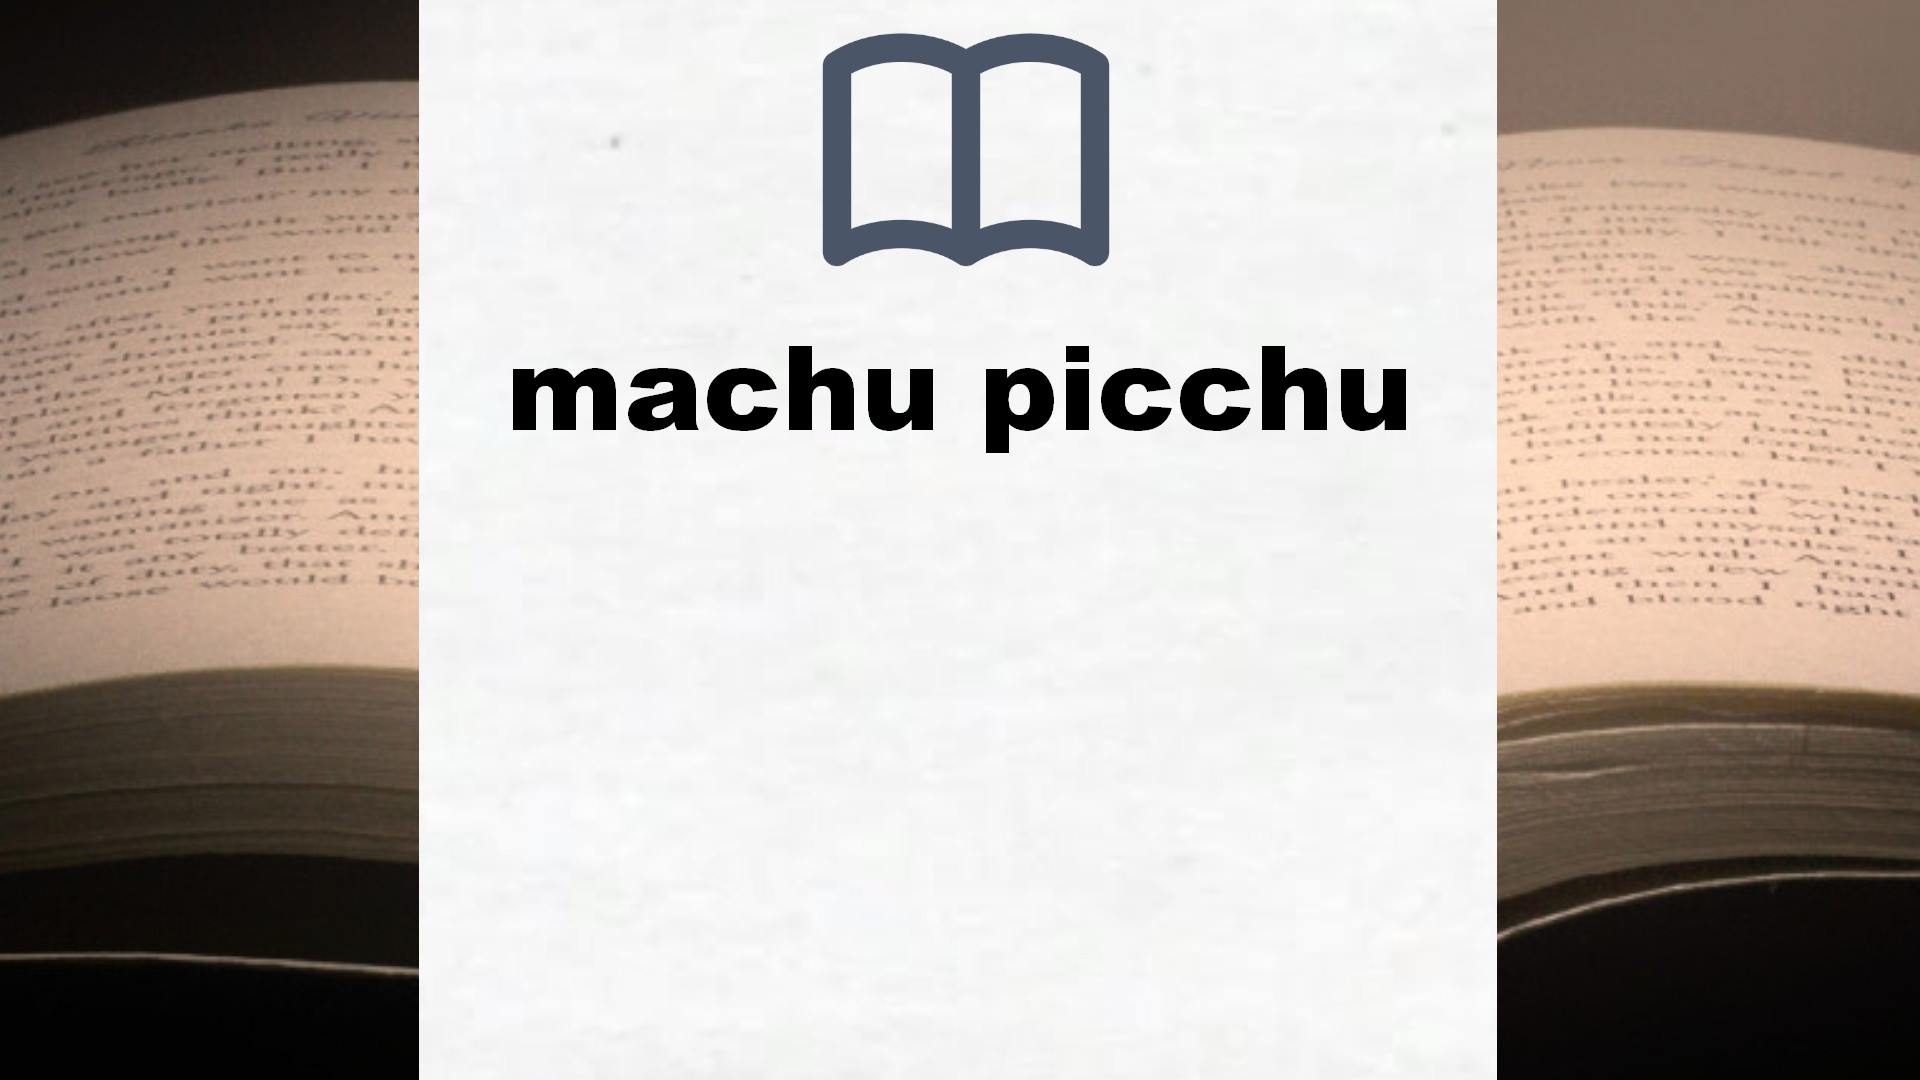 Libros sobre machu picchu